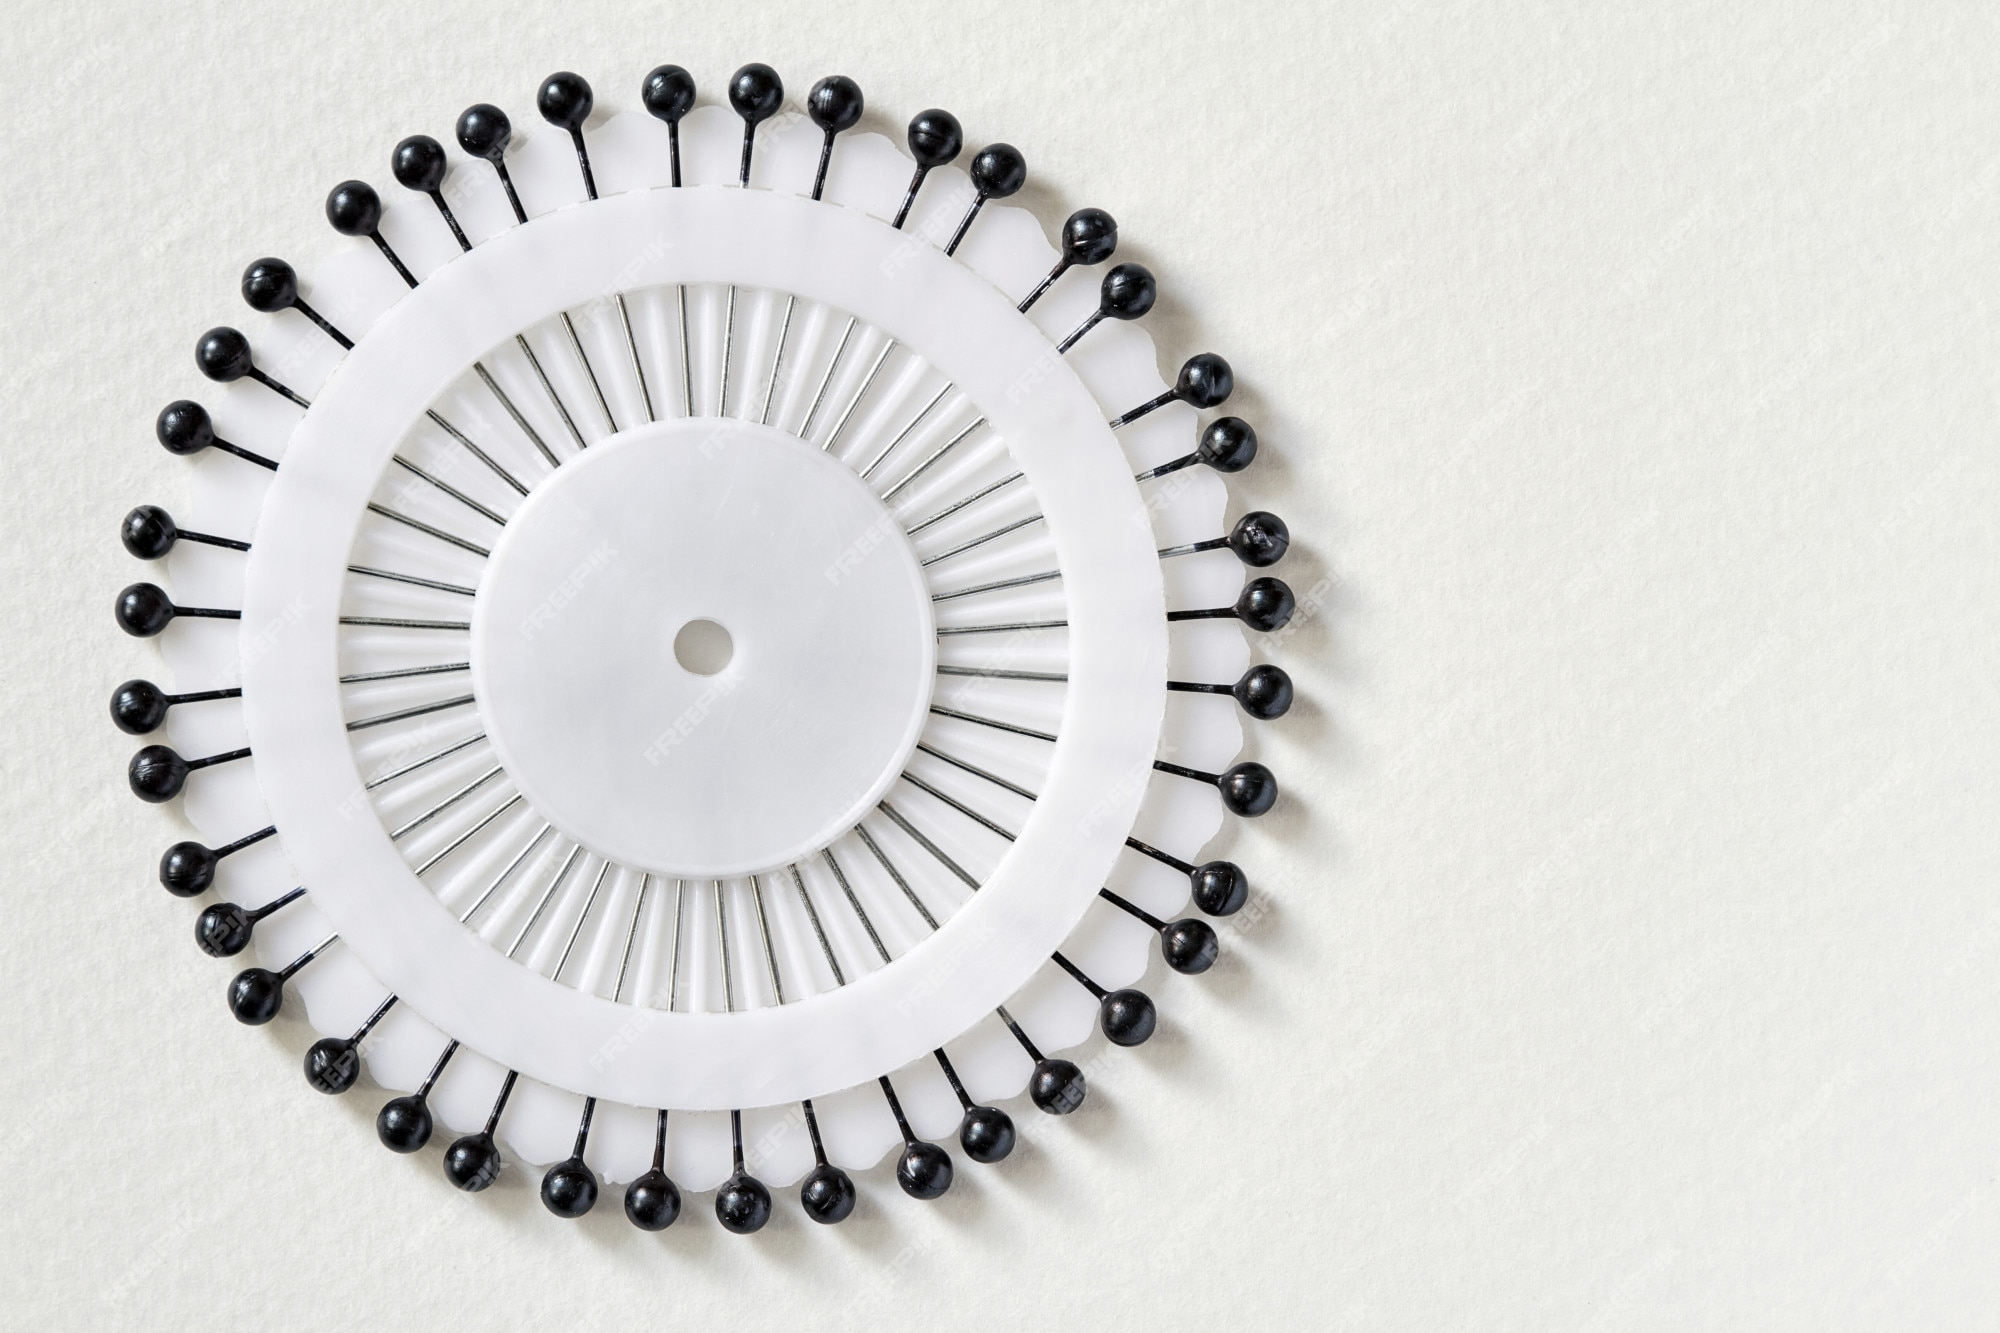 Cama aguja blanca con alfileres negros sobre fondo blanco. juego de alfileres con cabeza negra. primer plano, enfoque selectivo, superior | Foto Premium